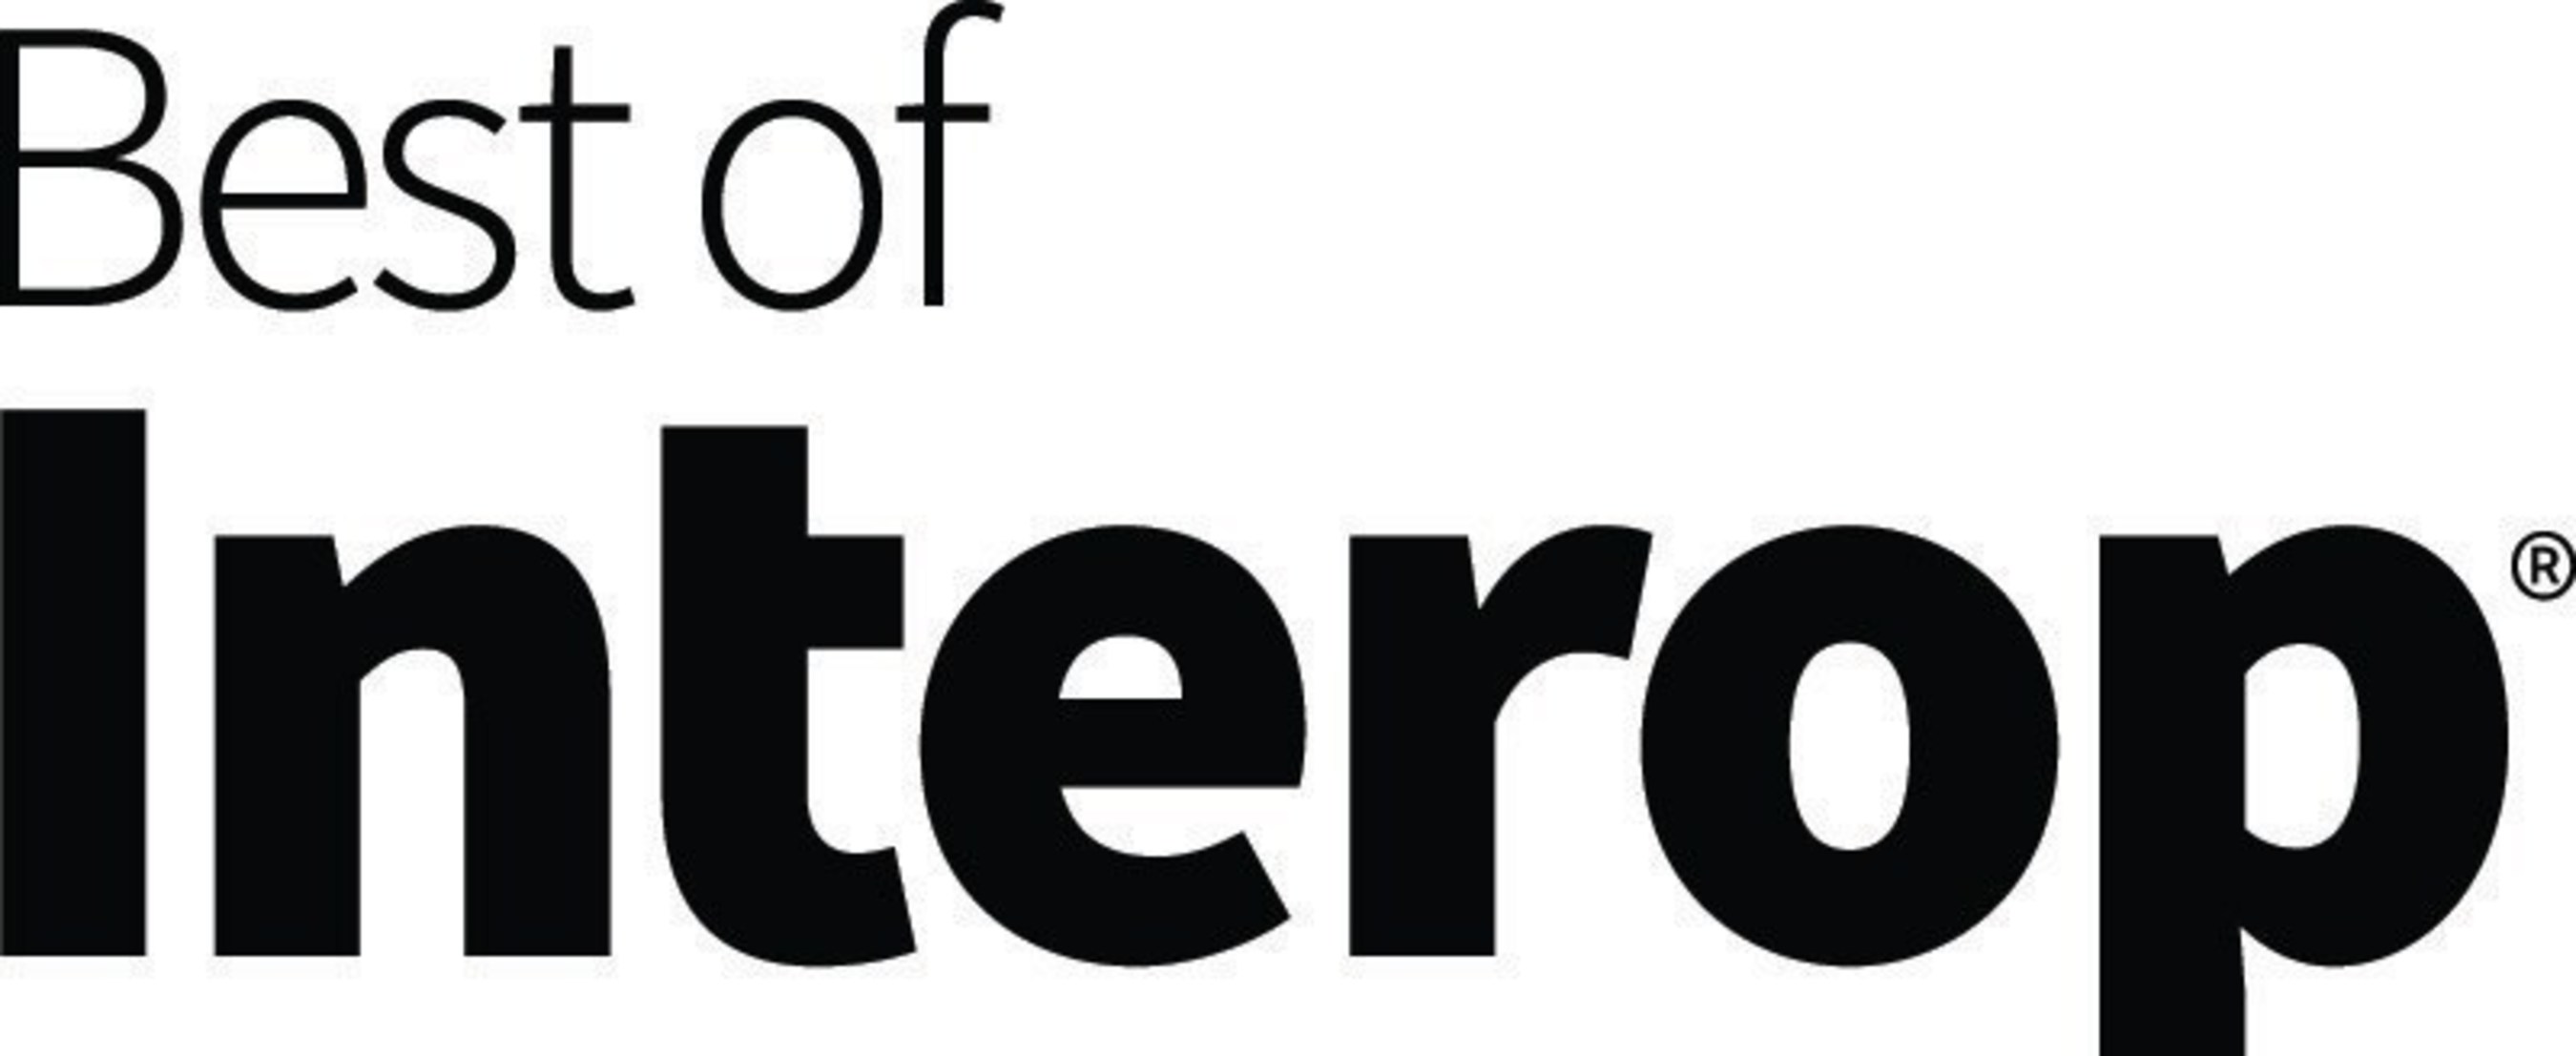 Interop Las Vegas 2016 Announces Leading IT Services Across 10 Categories as Best of Interop Award Finalists